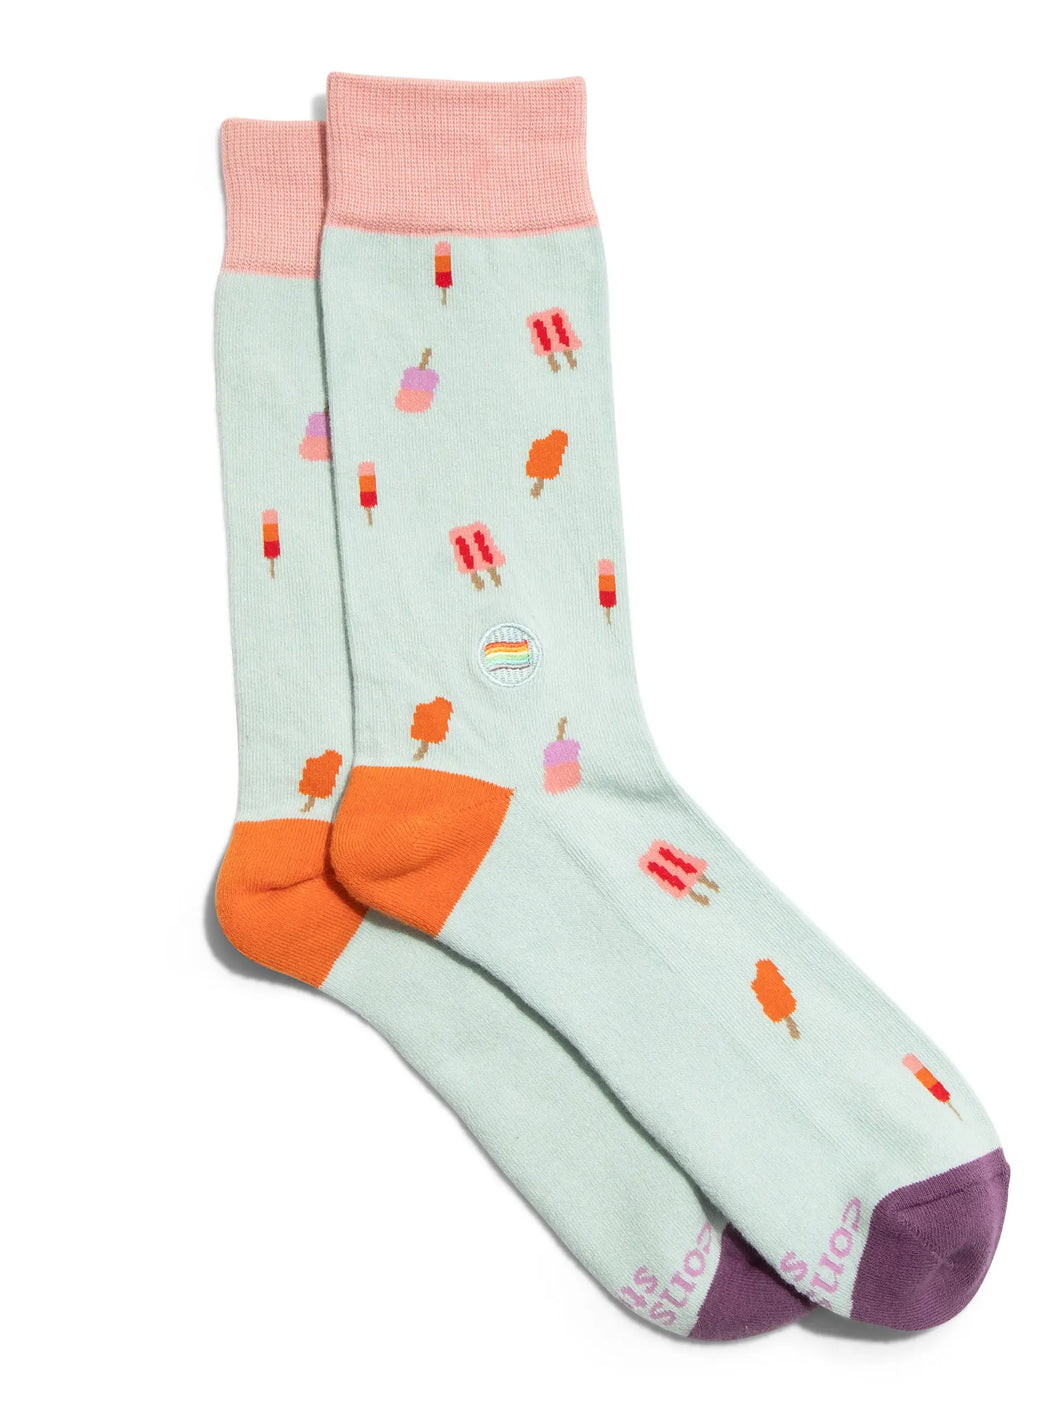 Socks that Save LGBTQ Lives (Orange Popsicles) - Small